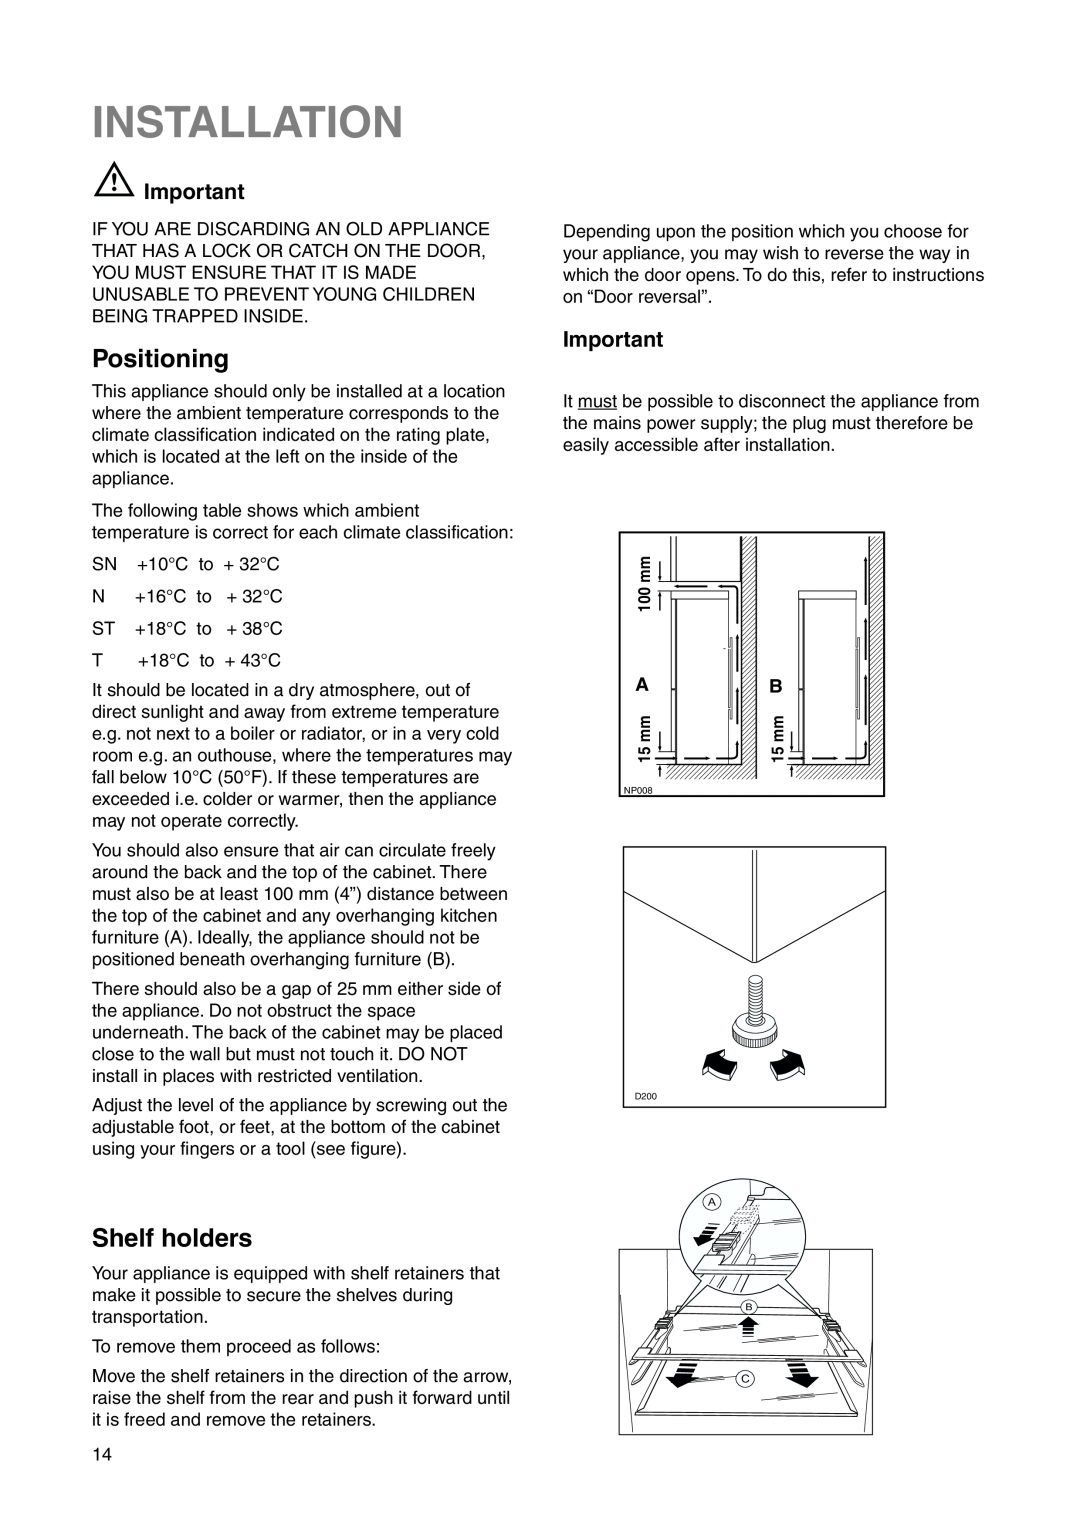 Zanussi ZRB 3225 X user manual Installation, Positioning, Shelf holders 